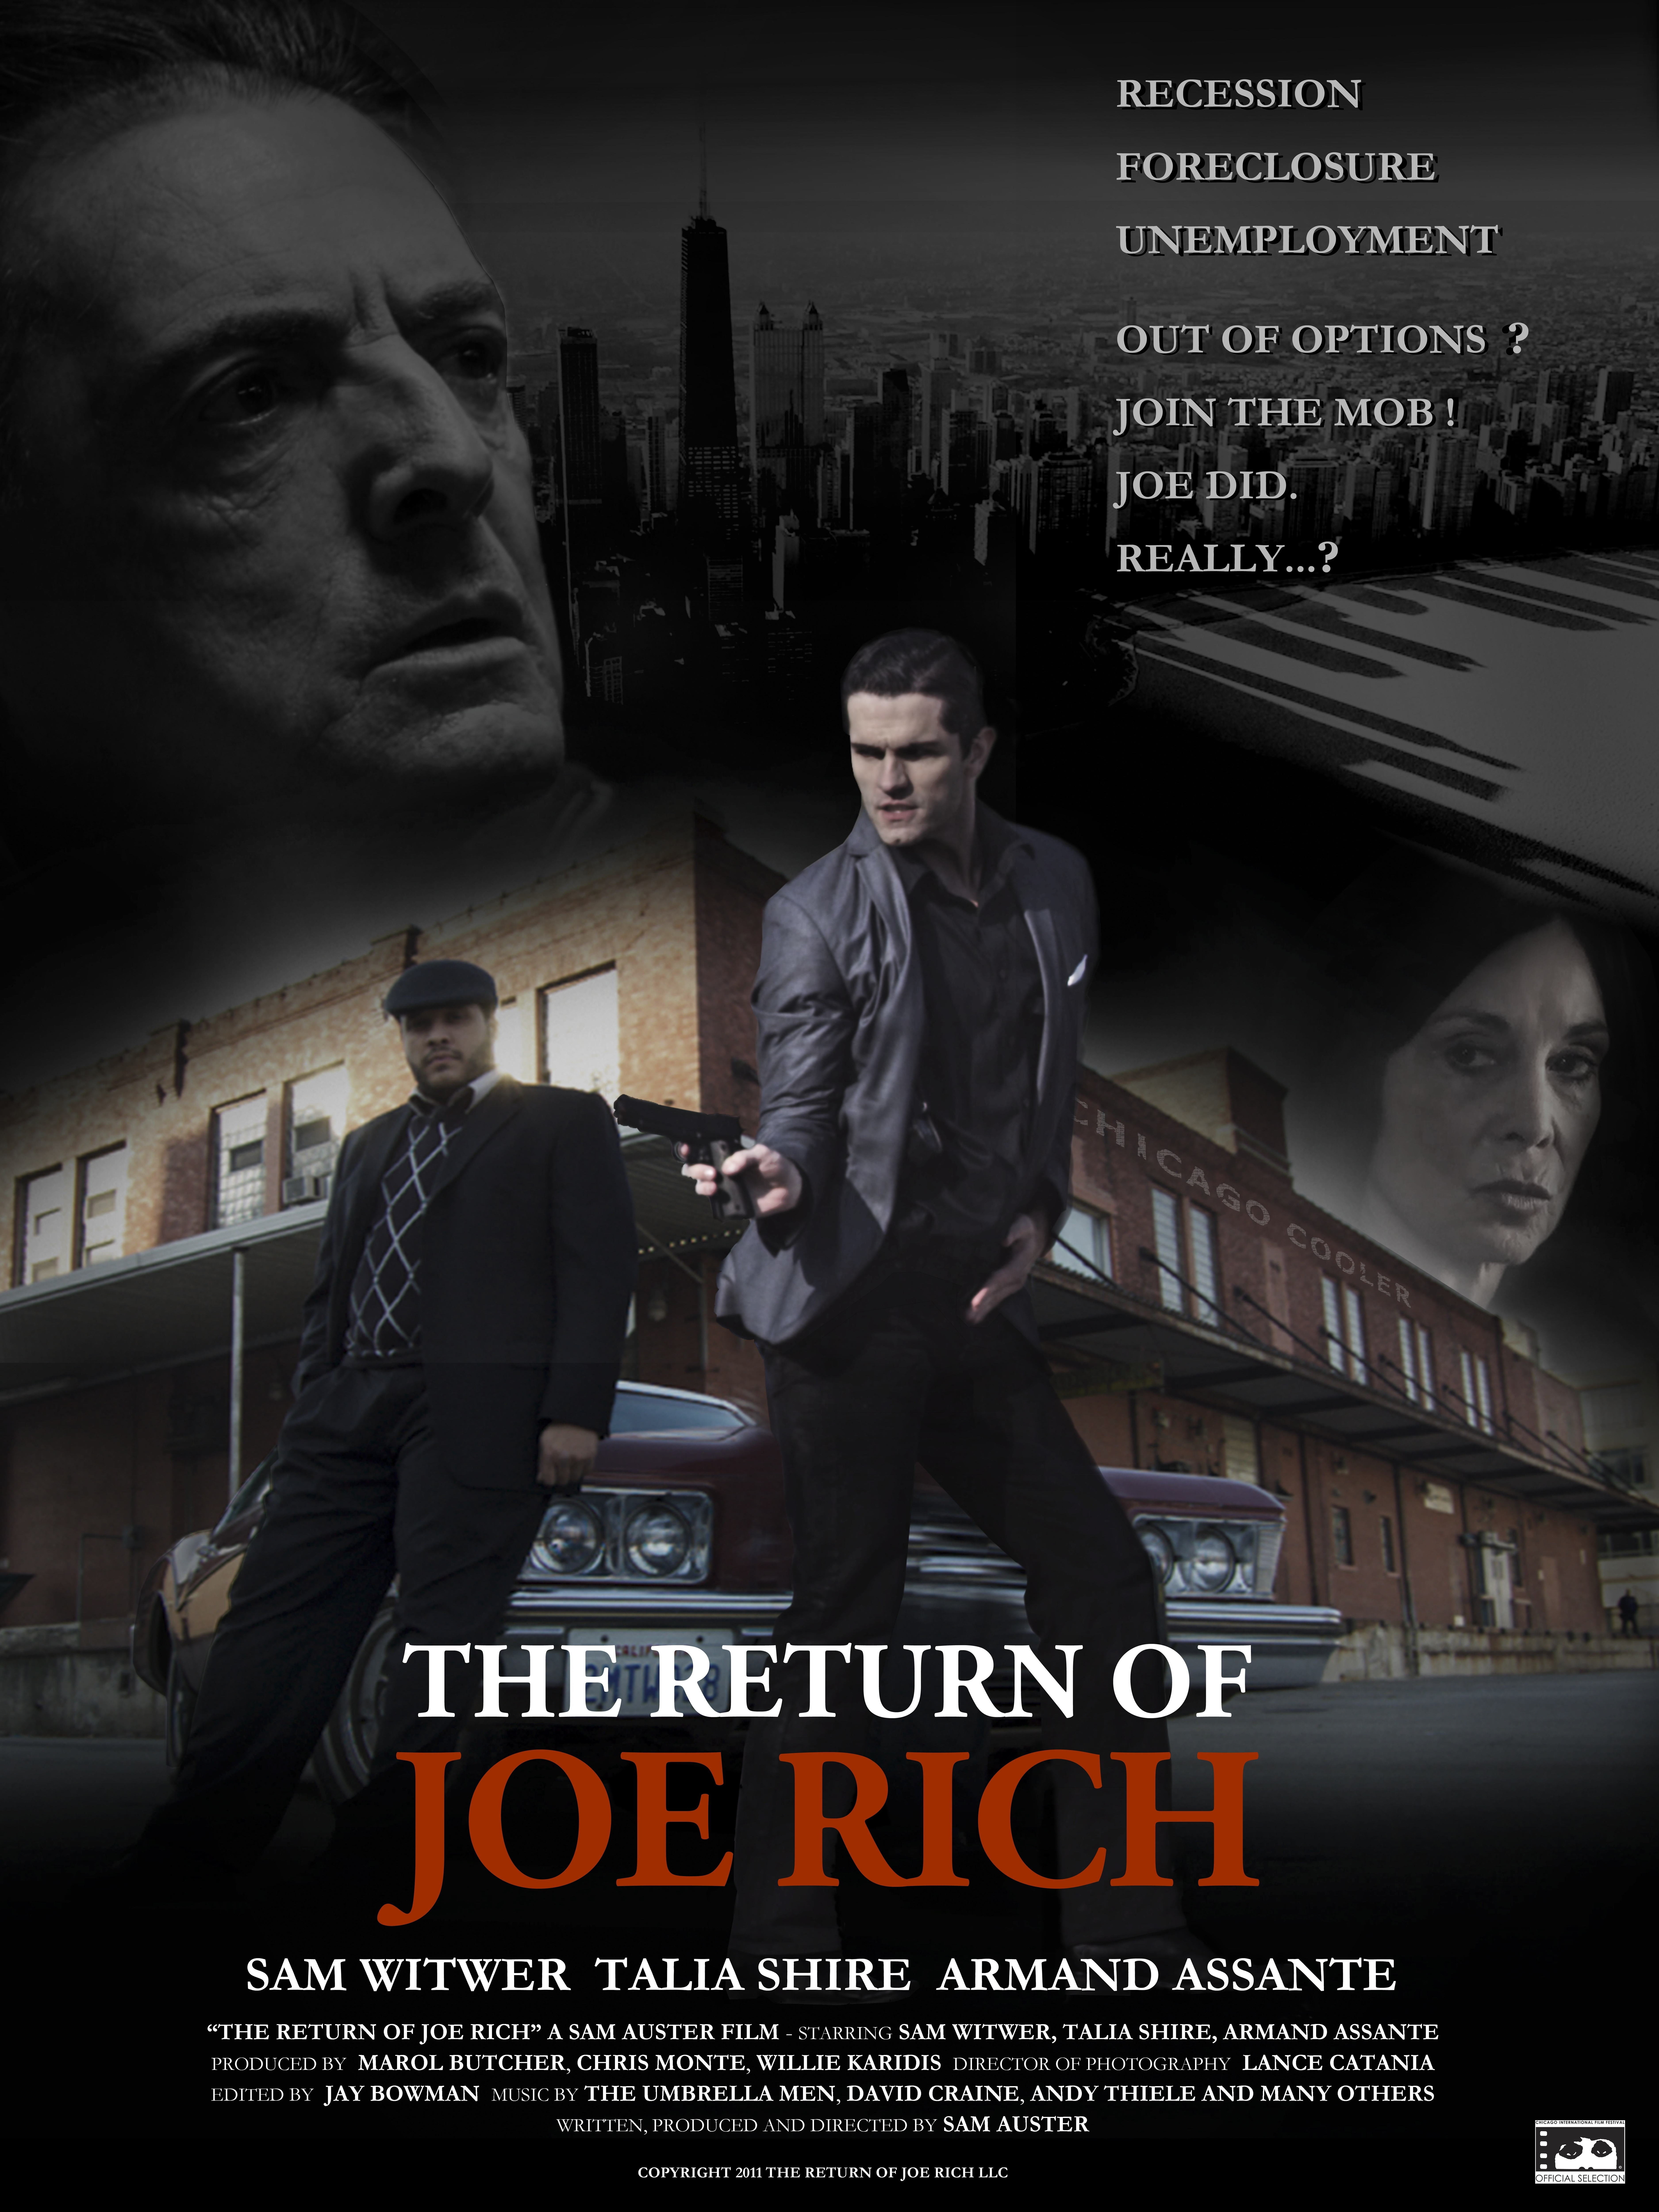 Nonton film The Return of Joe Rich layarkaca21 indoxx1 ganool online streaming terbaru